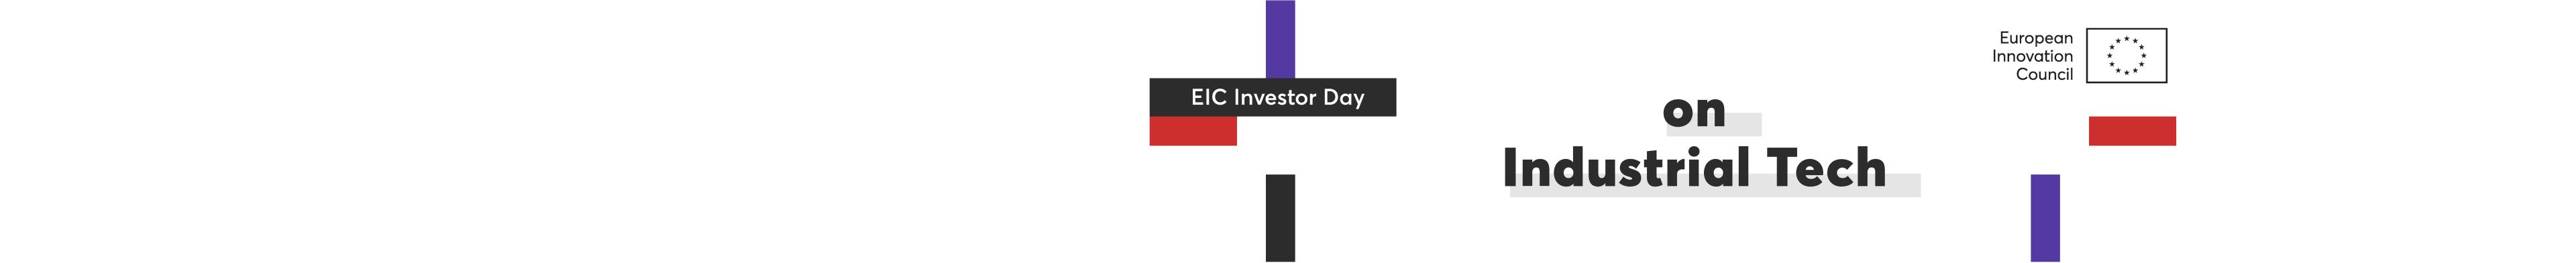 EIC Investor Days Industrial Tech Community Banner